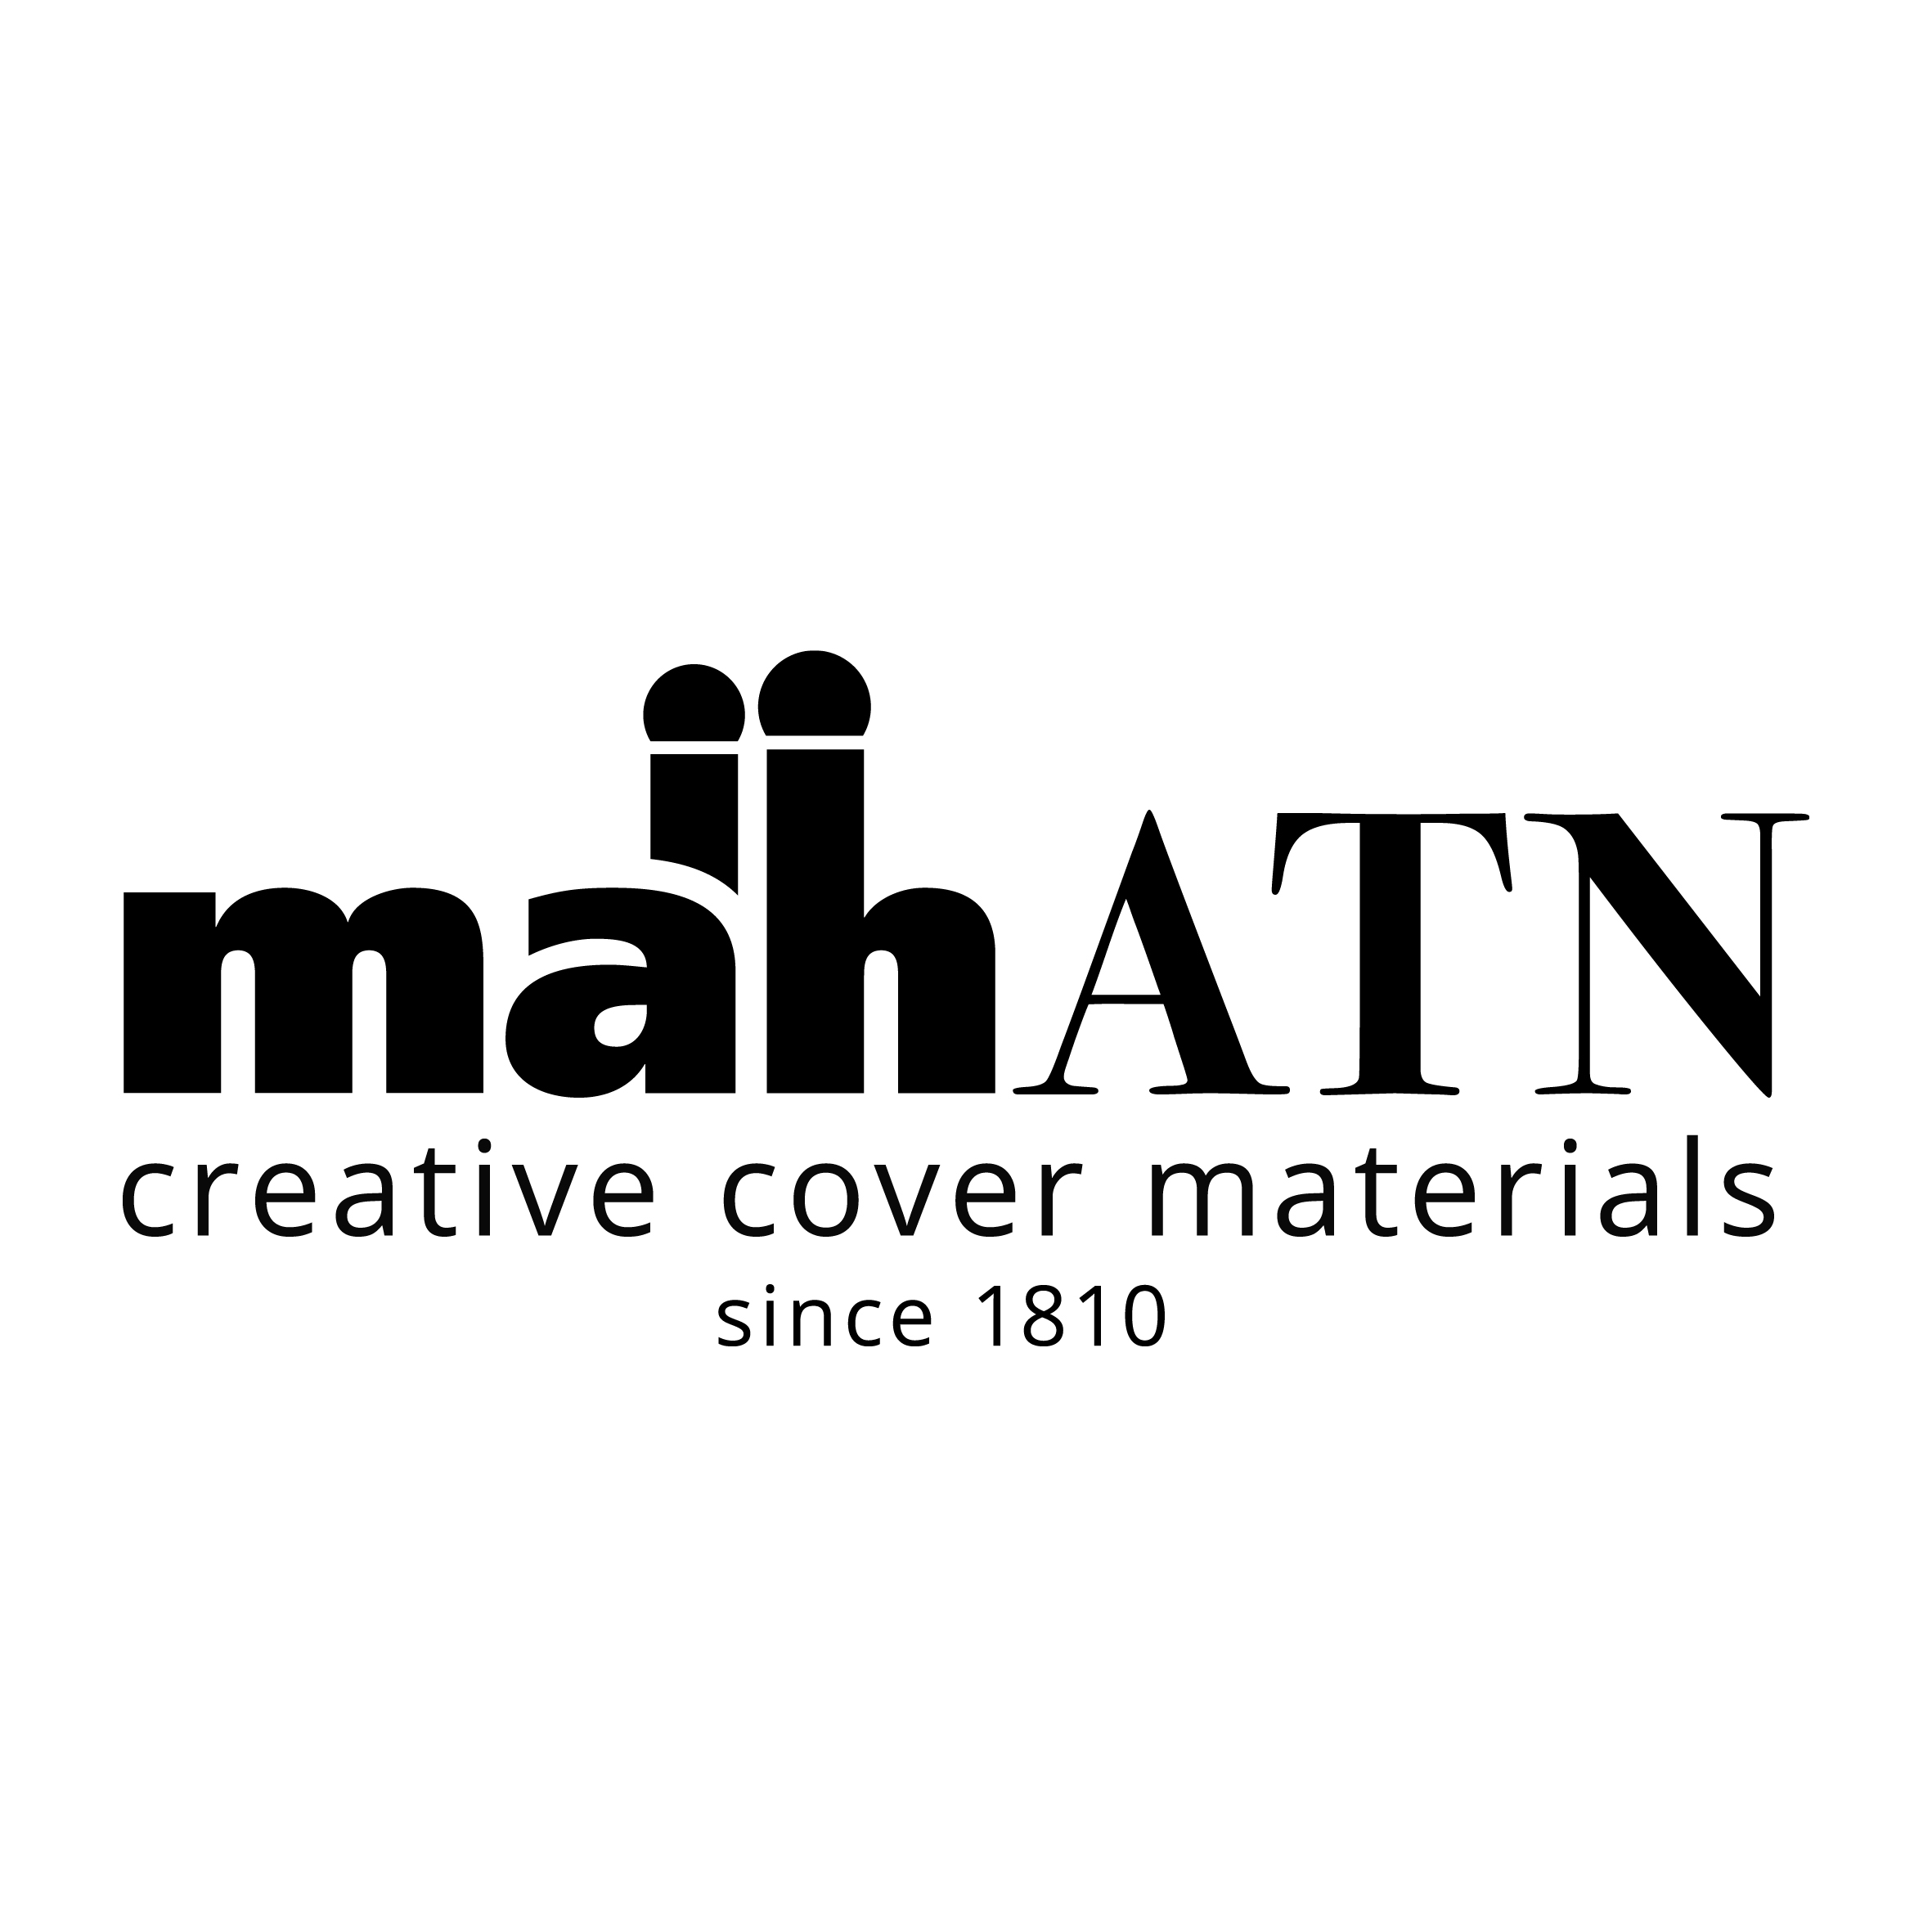 mah-ATN GmbH